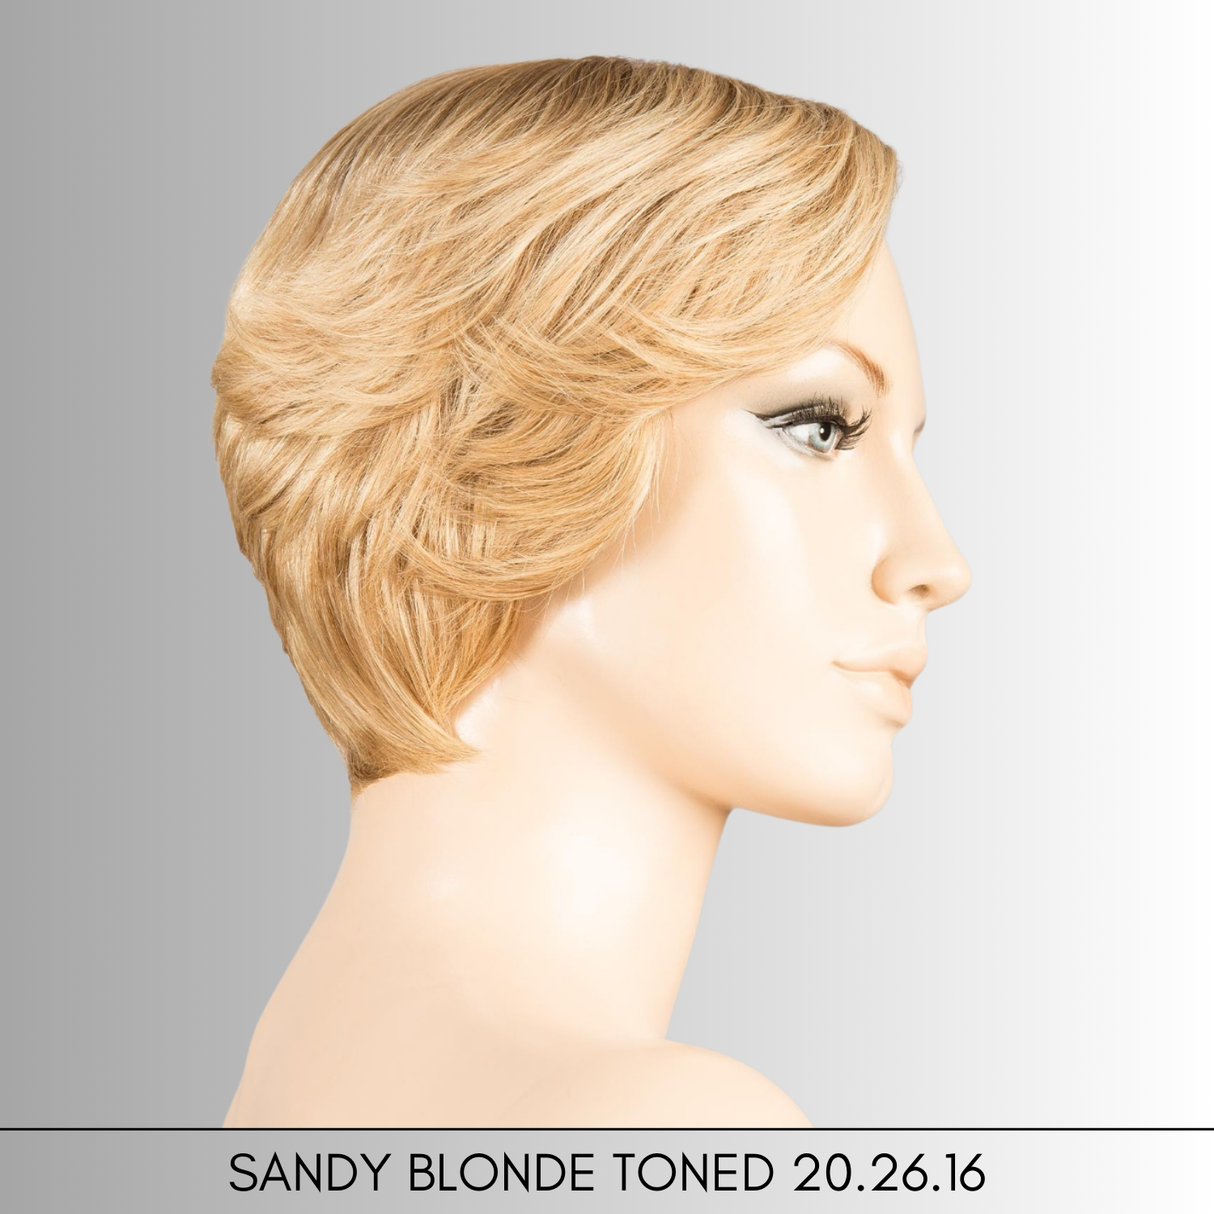 Mondo European Remy Human Hair Wig - Pure Collection by Ellen Wille